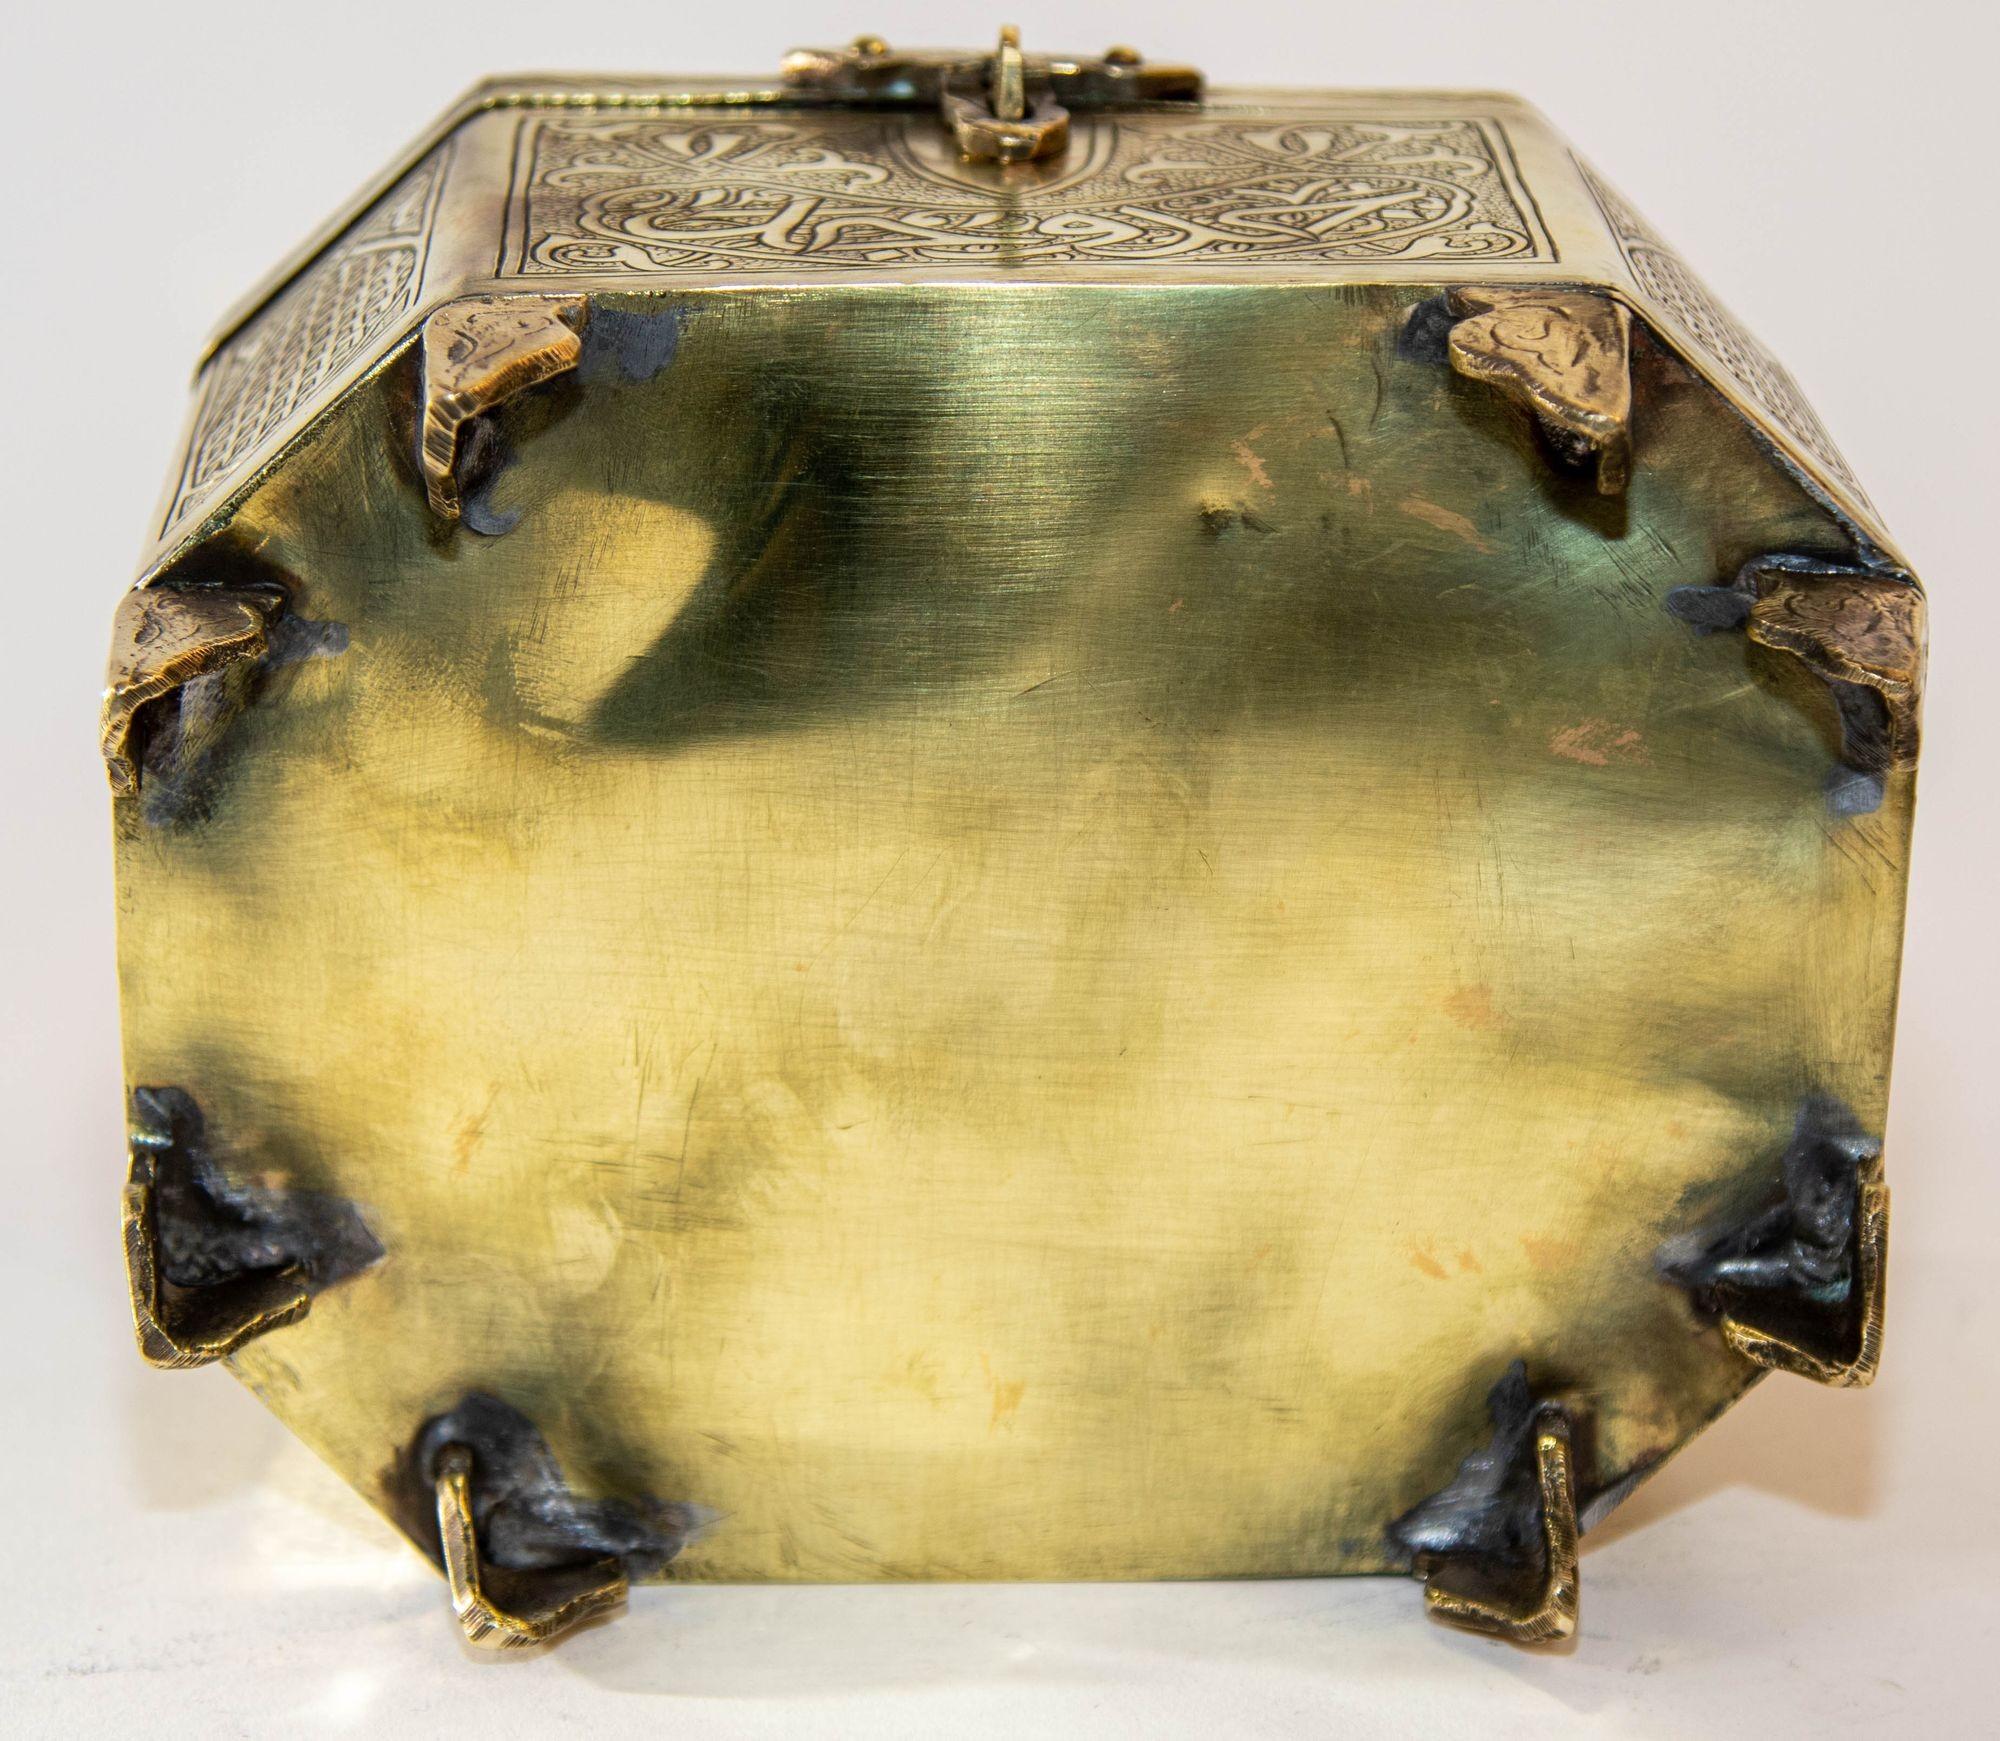 1920 Persian Brass Jewelry Box in Mamluk Revival Damascene Moorish Islamic Style For Sale 2